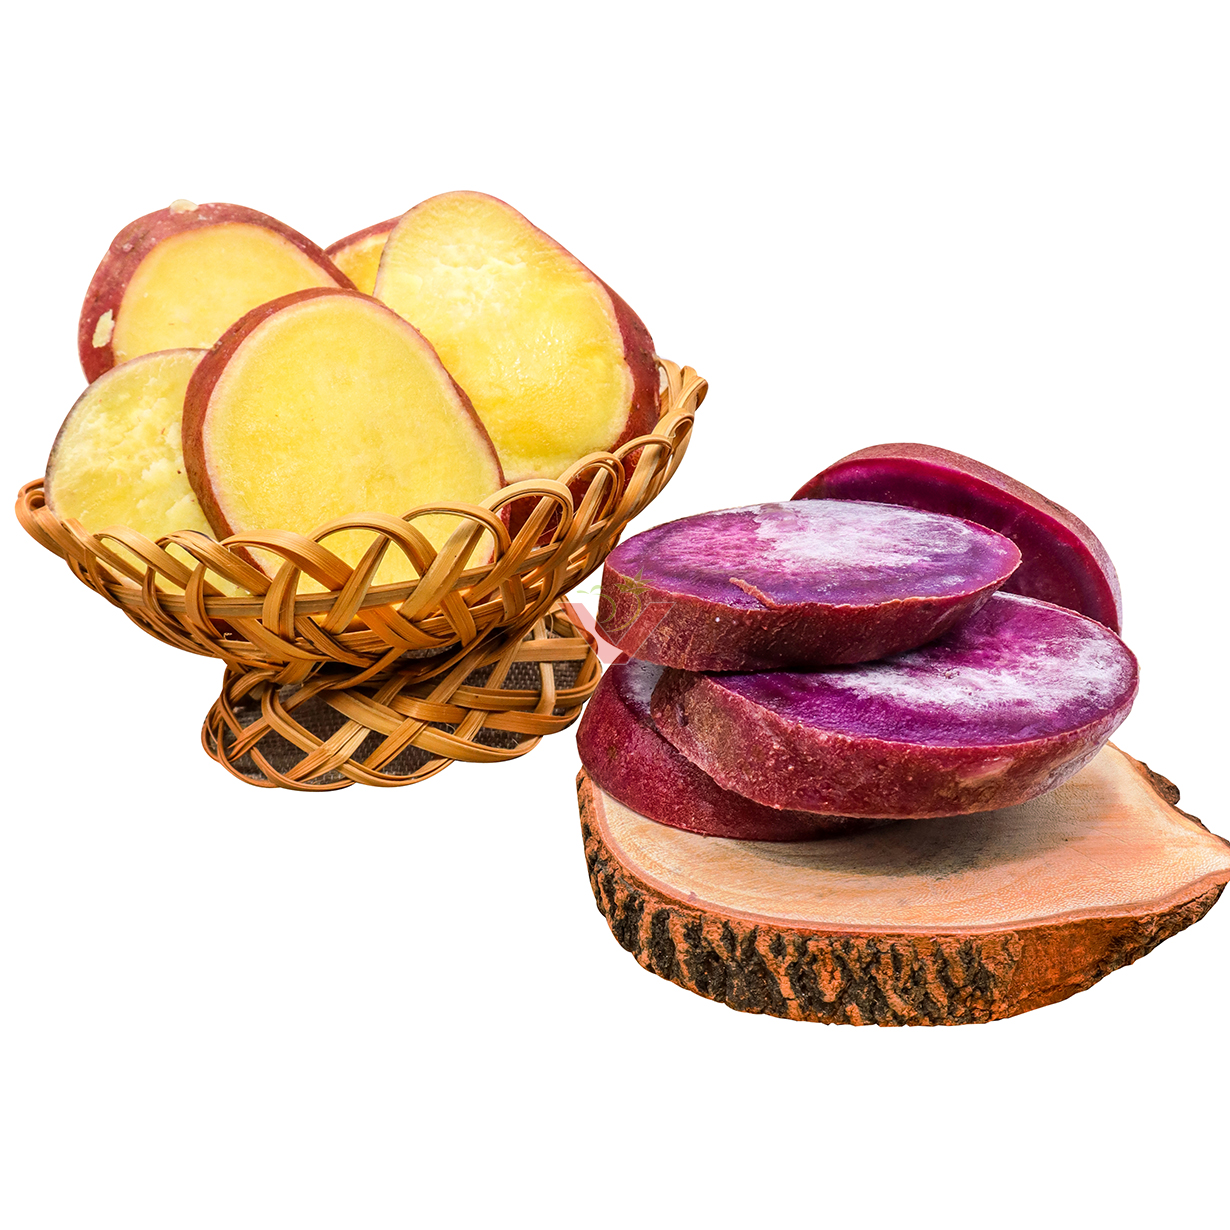 yellow-purple-sweet-potato-slice-iqf